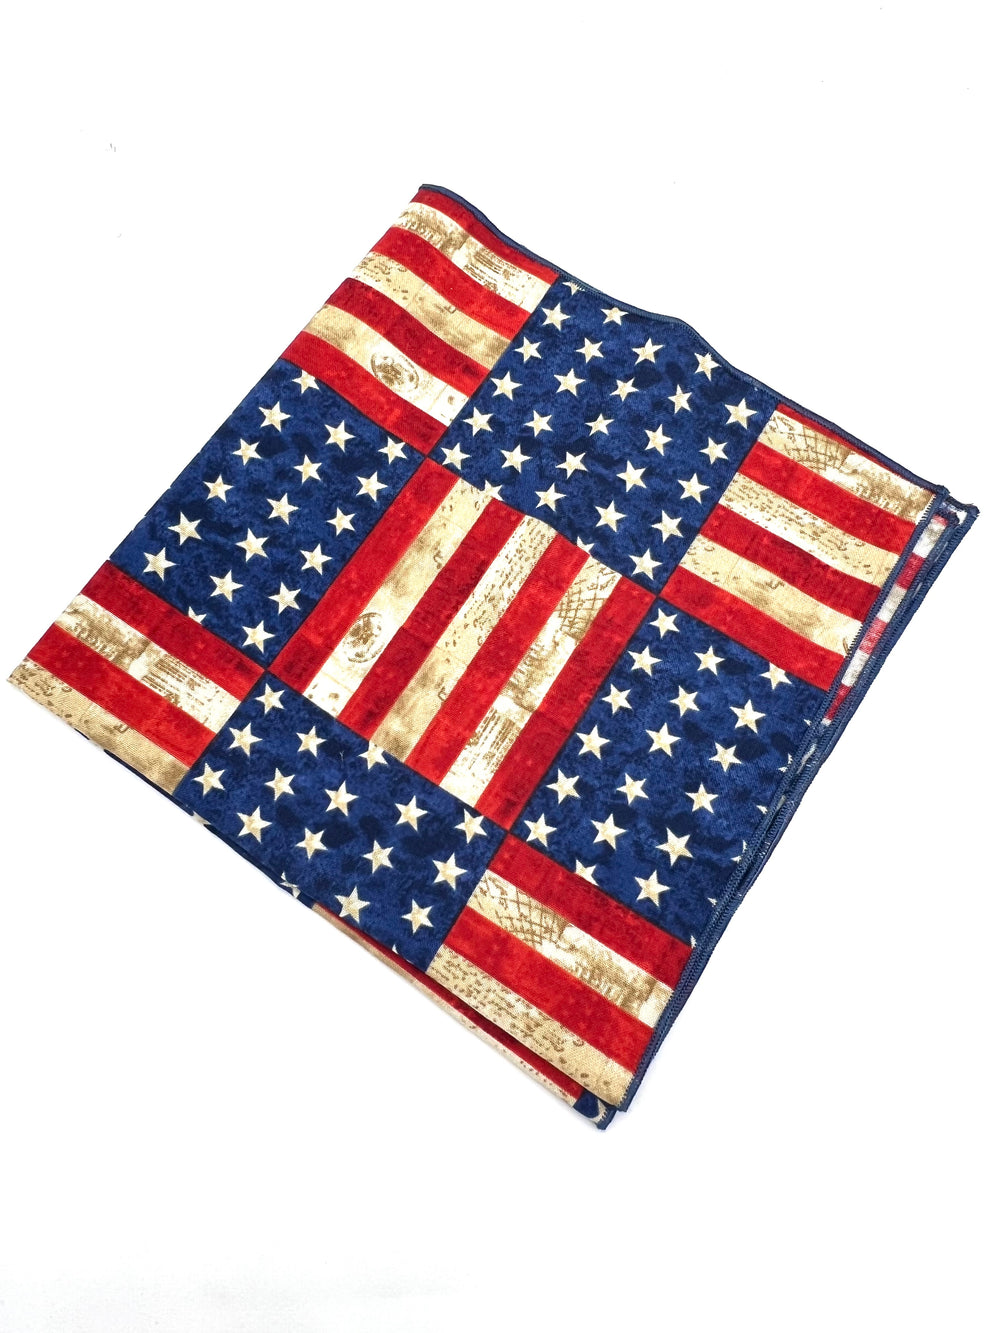 The Freedom Handkerchief